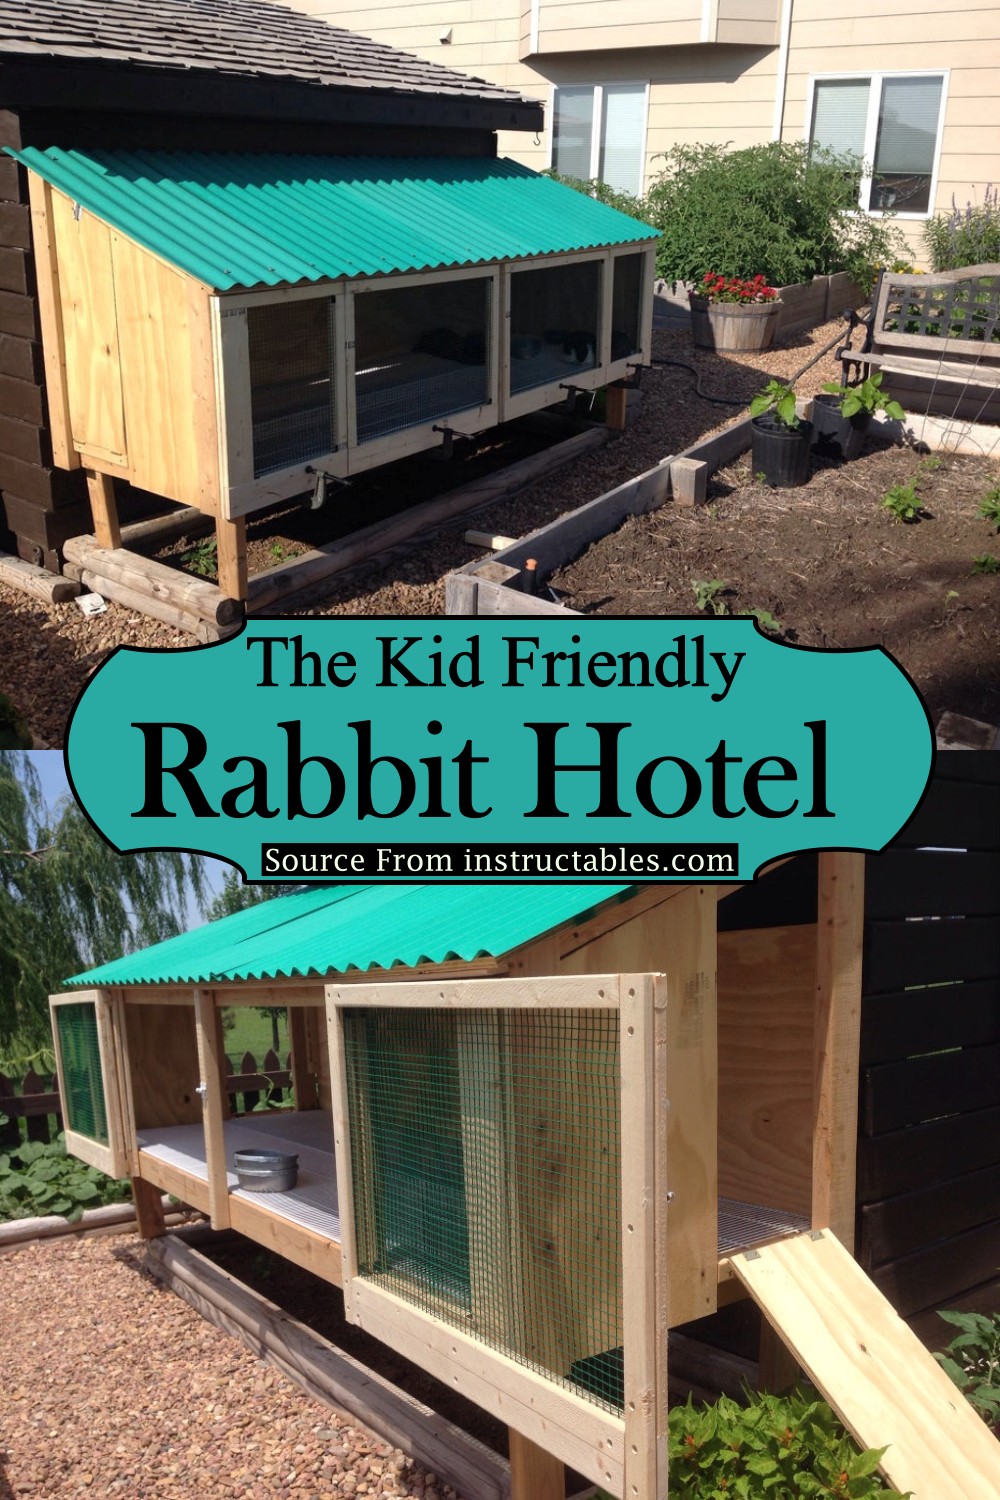 The Kid-Friendly Rabbit Hotel